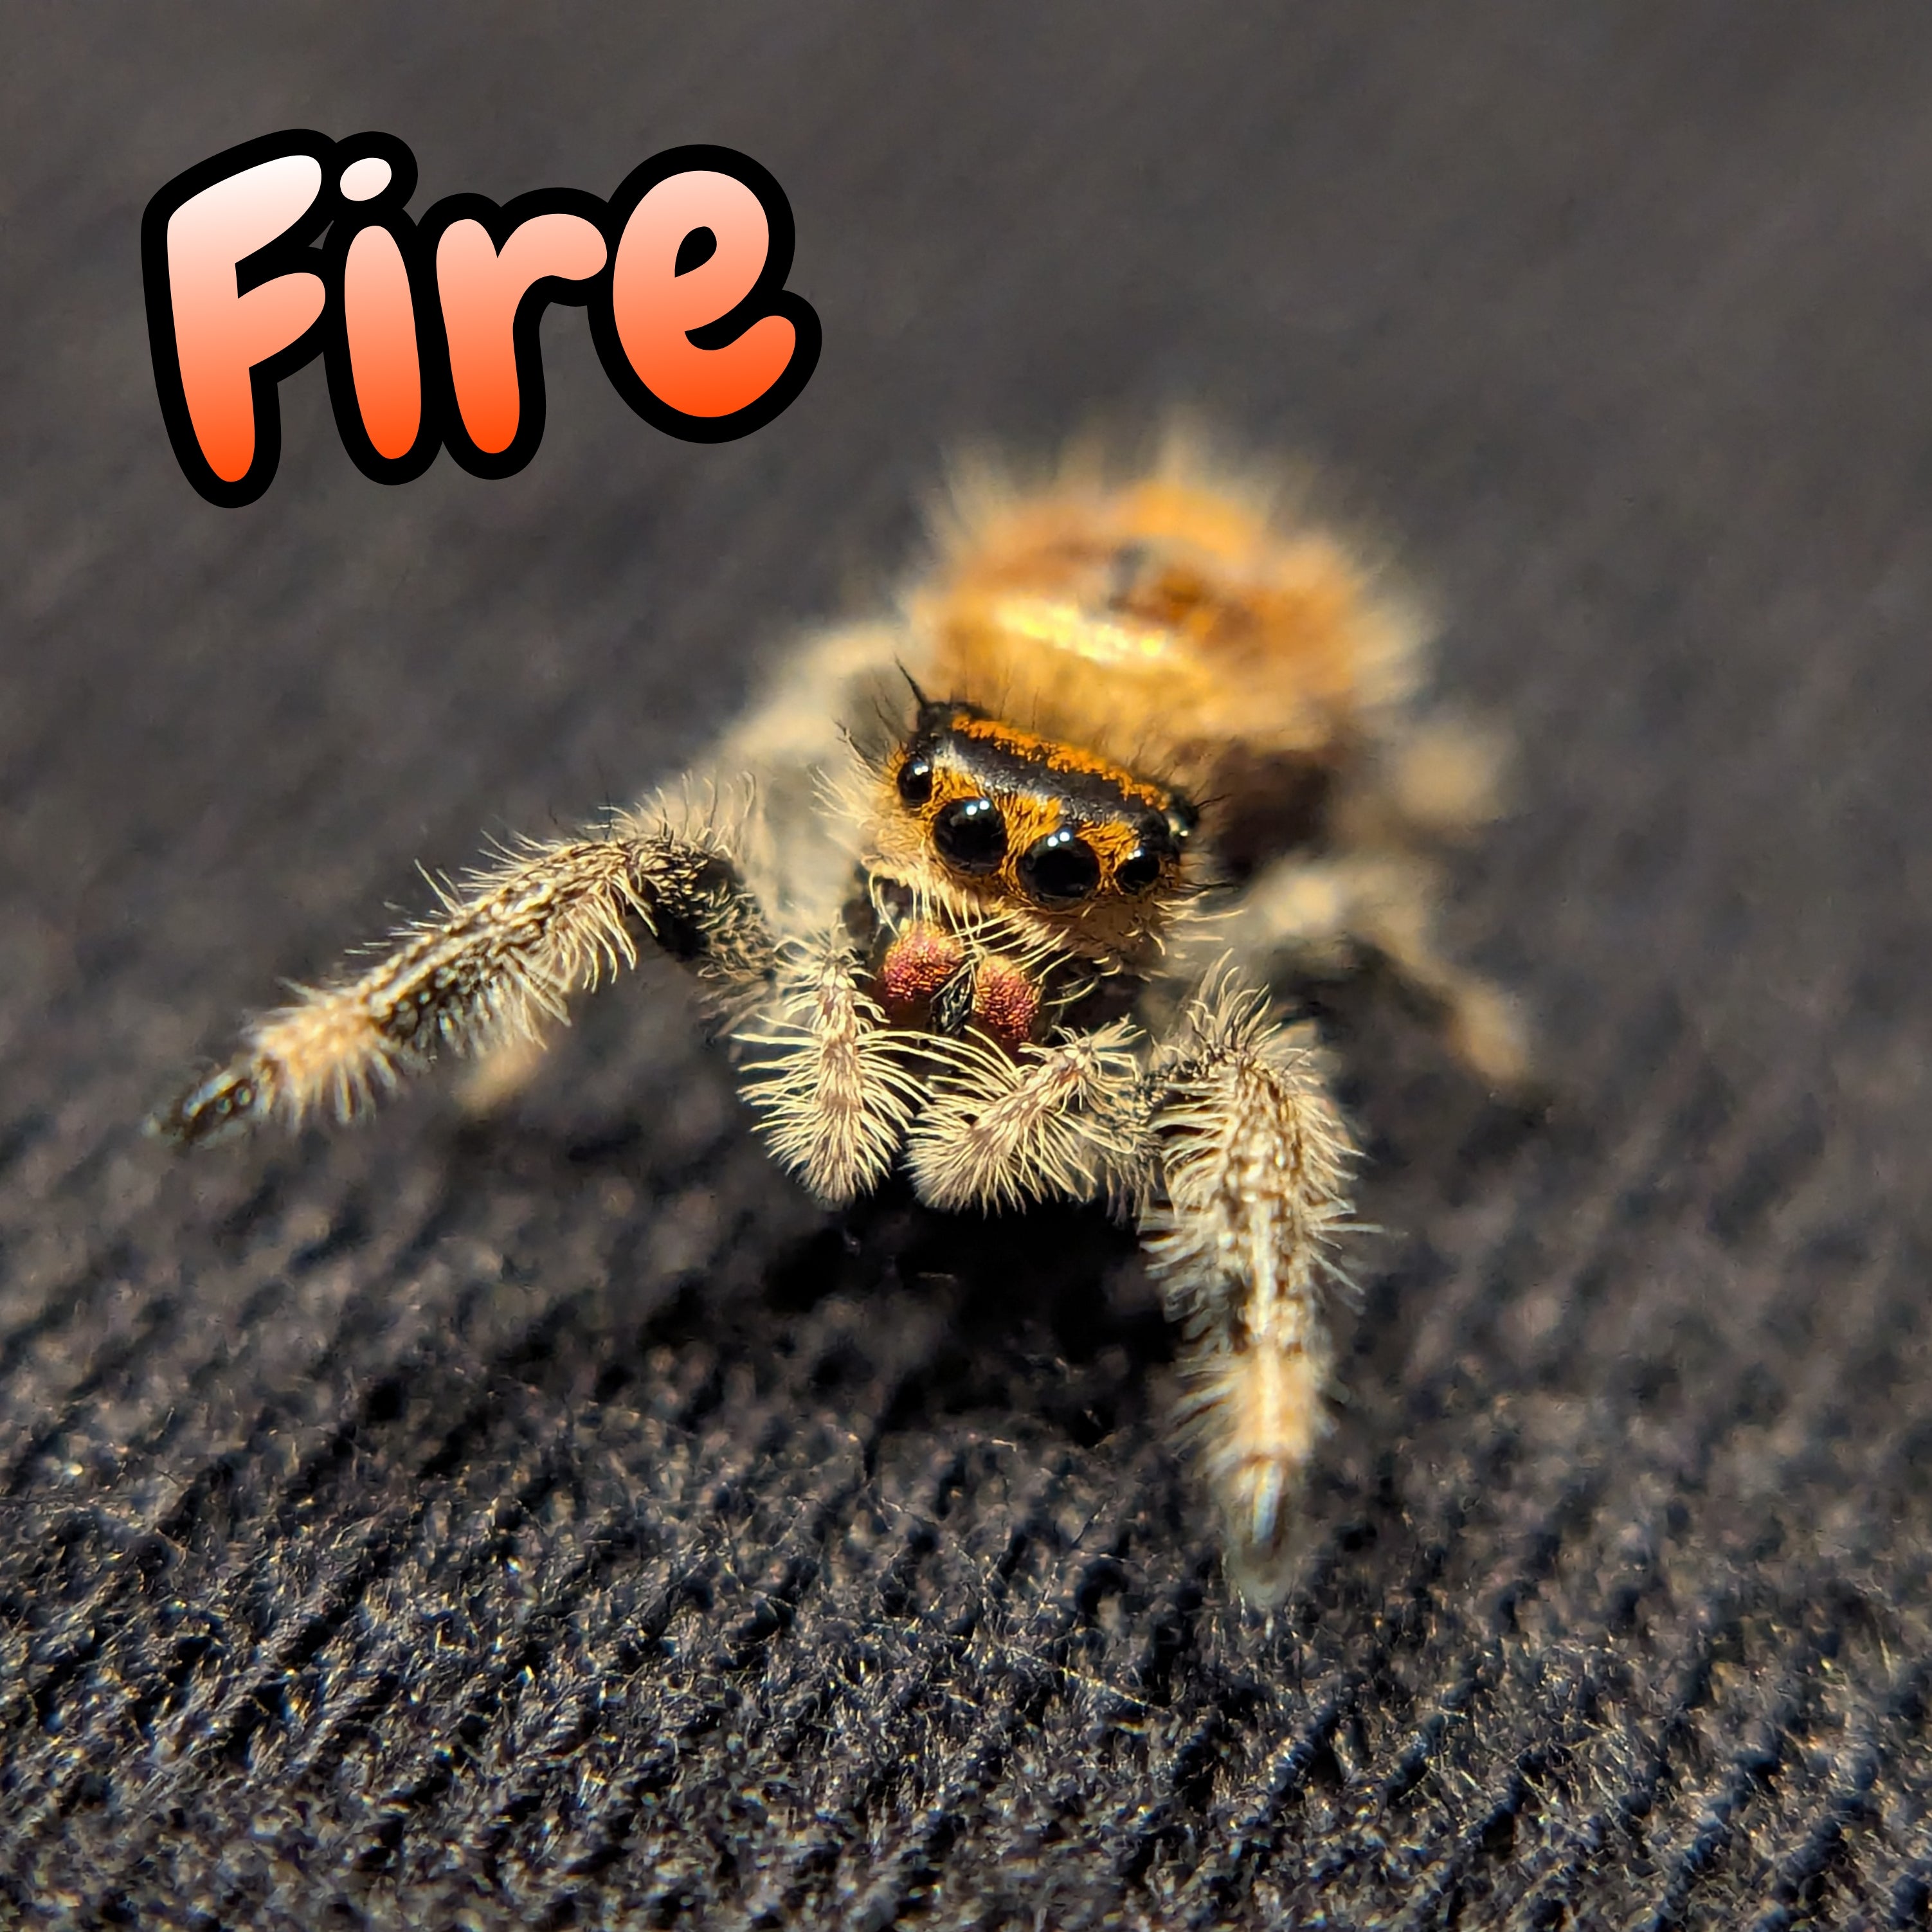 Regal Jumping Spider "Fire"